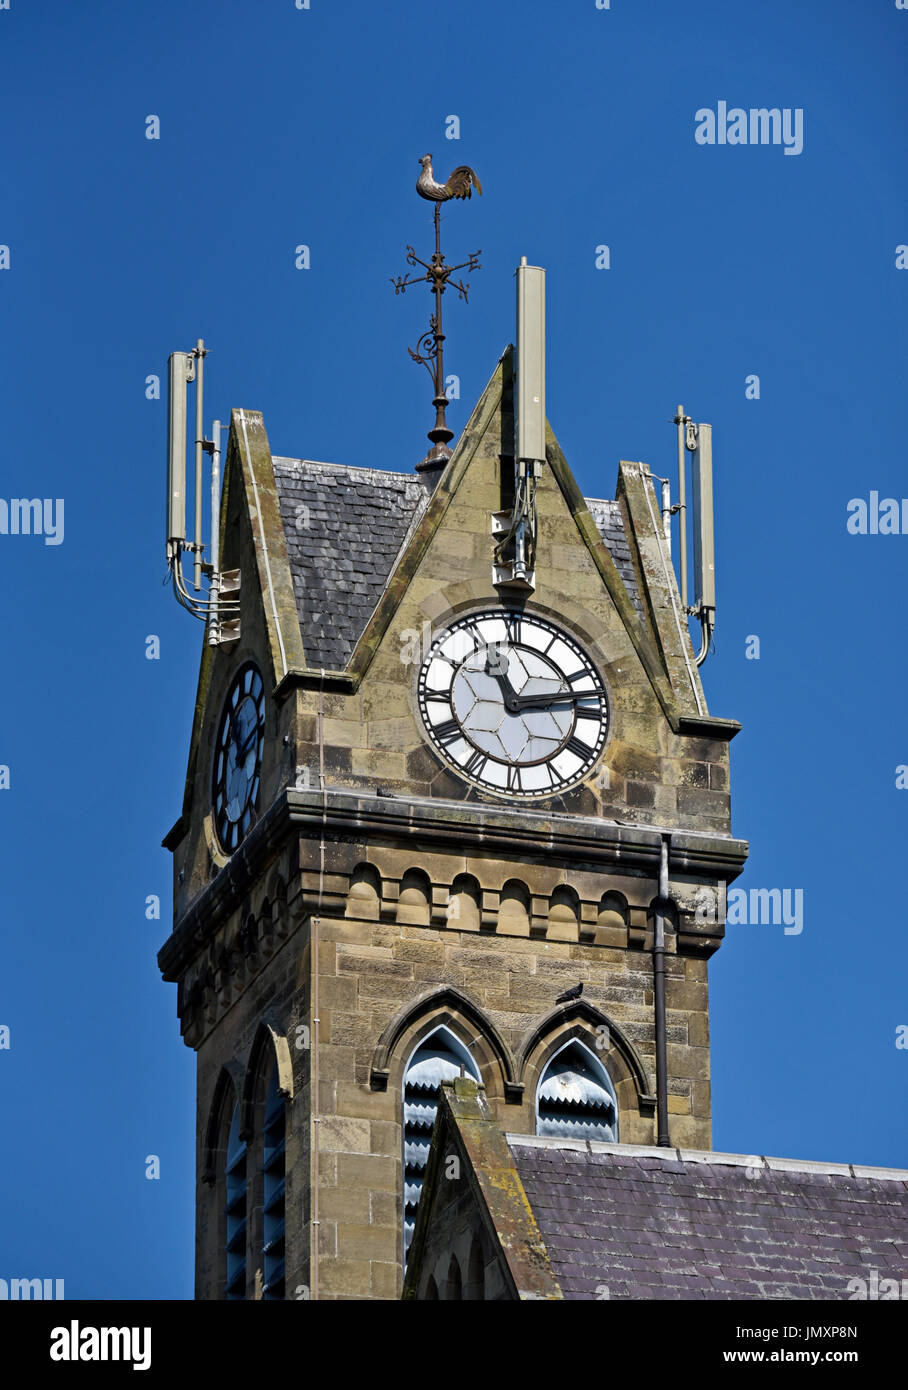 Clock Tower (detail). The Eildon Centre, Victoria Street, Coldstream, Scottish Borders, Berwickshire, Scotland, United Kingdom, Europe. Stock Photo